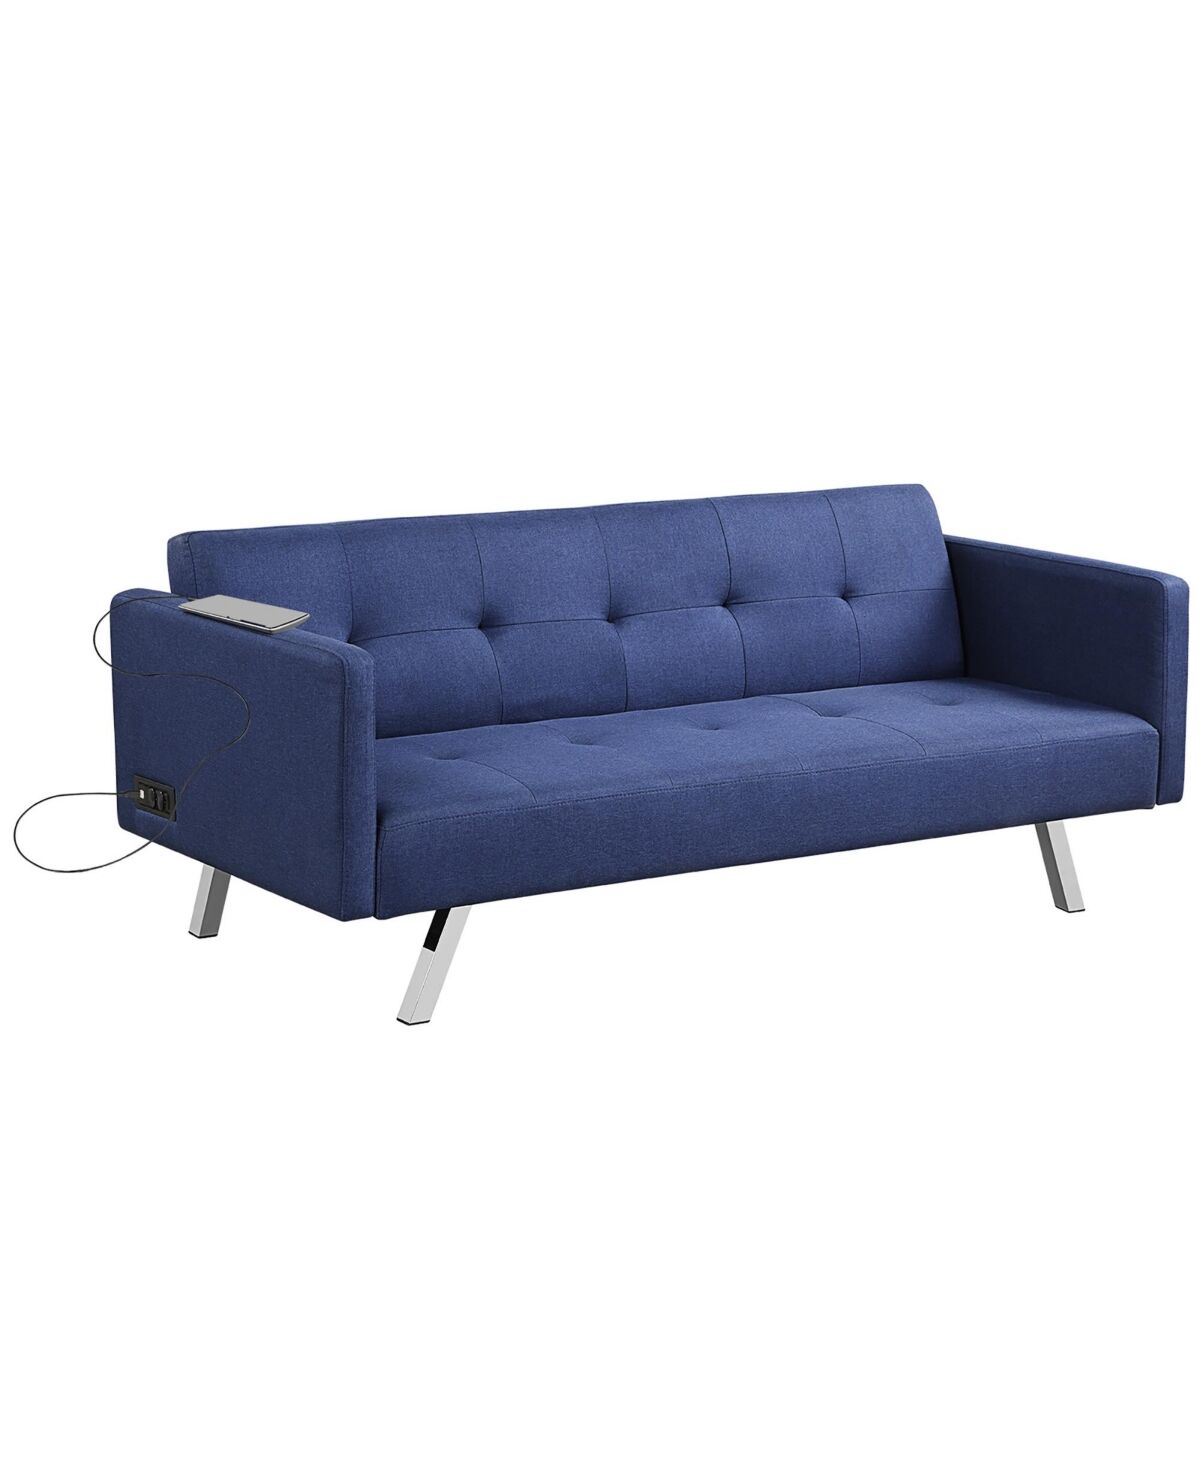 Costway Convertible Futon Sofa Bed Folding Recliner Usb Ports&Power Strip - Blue